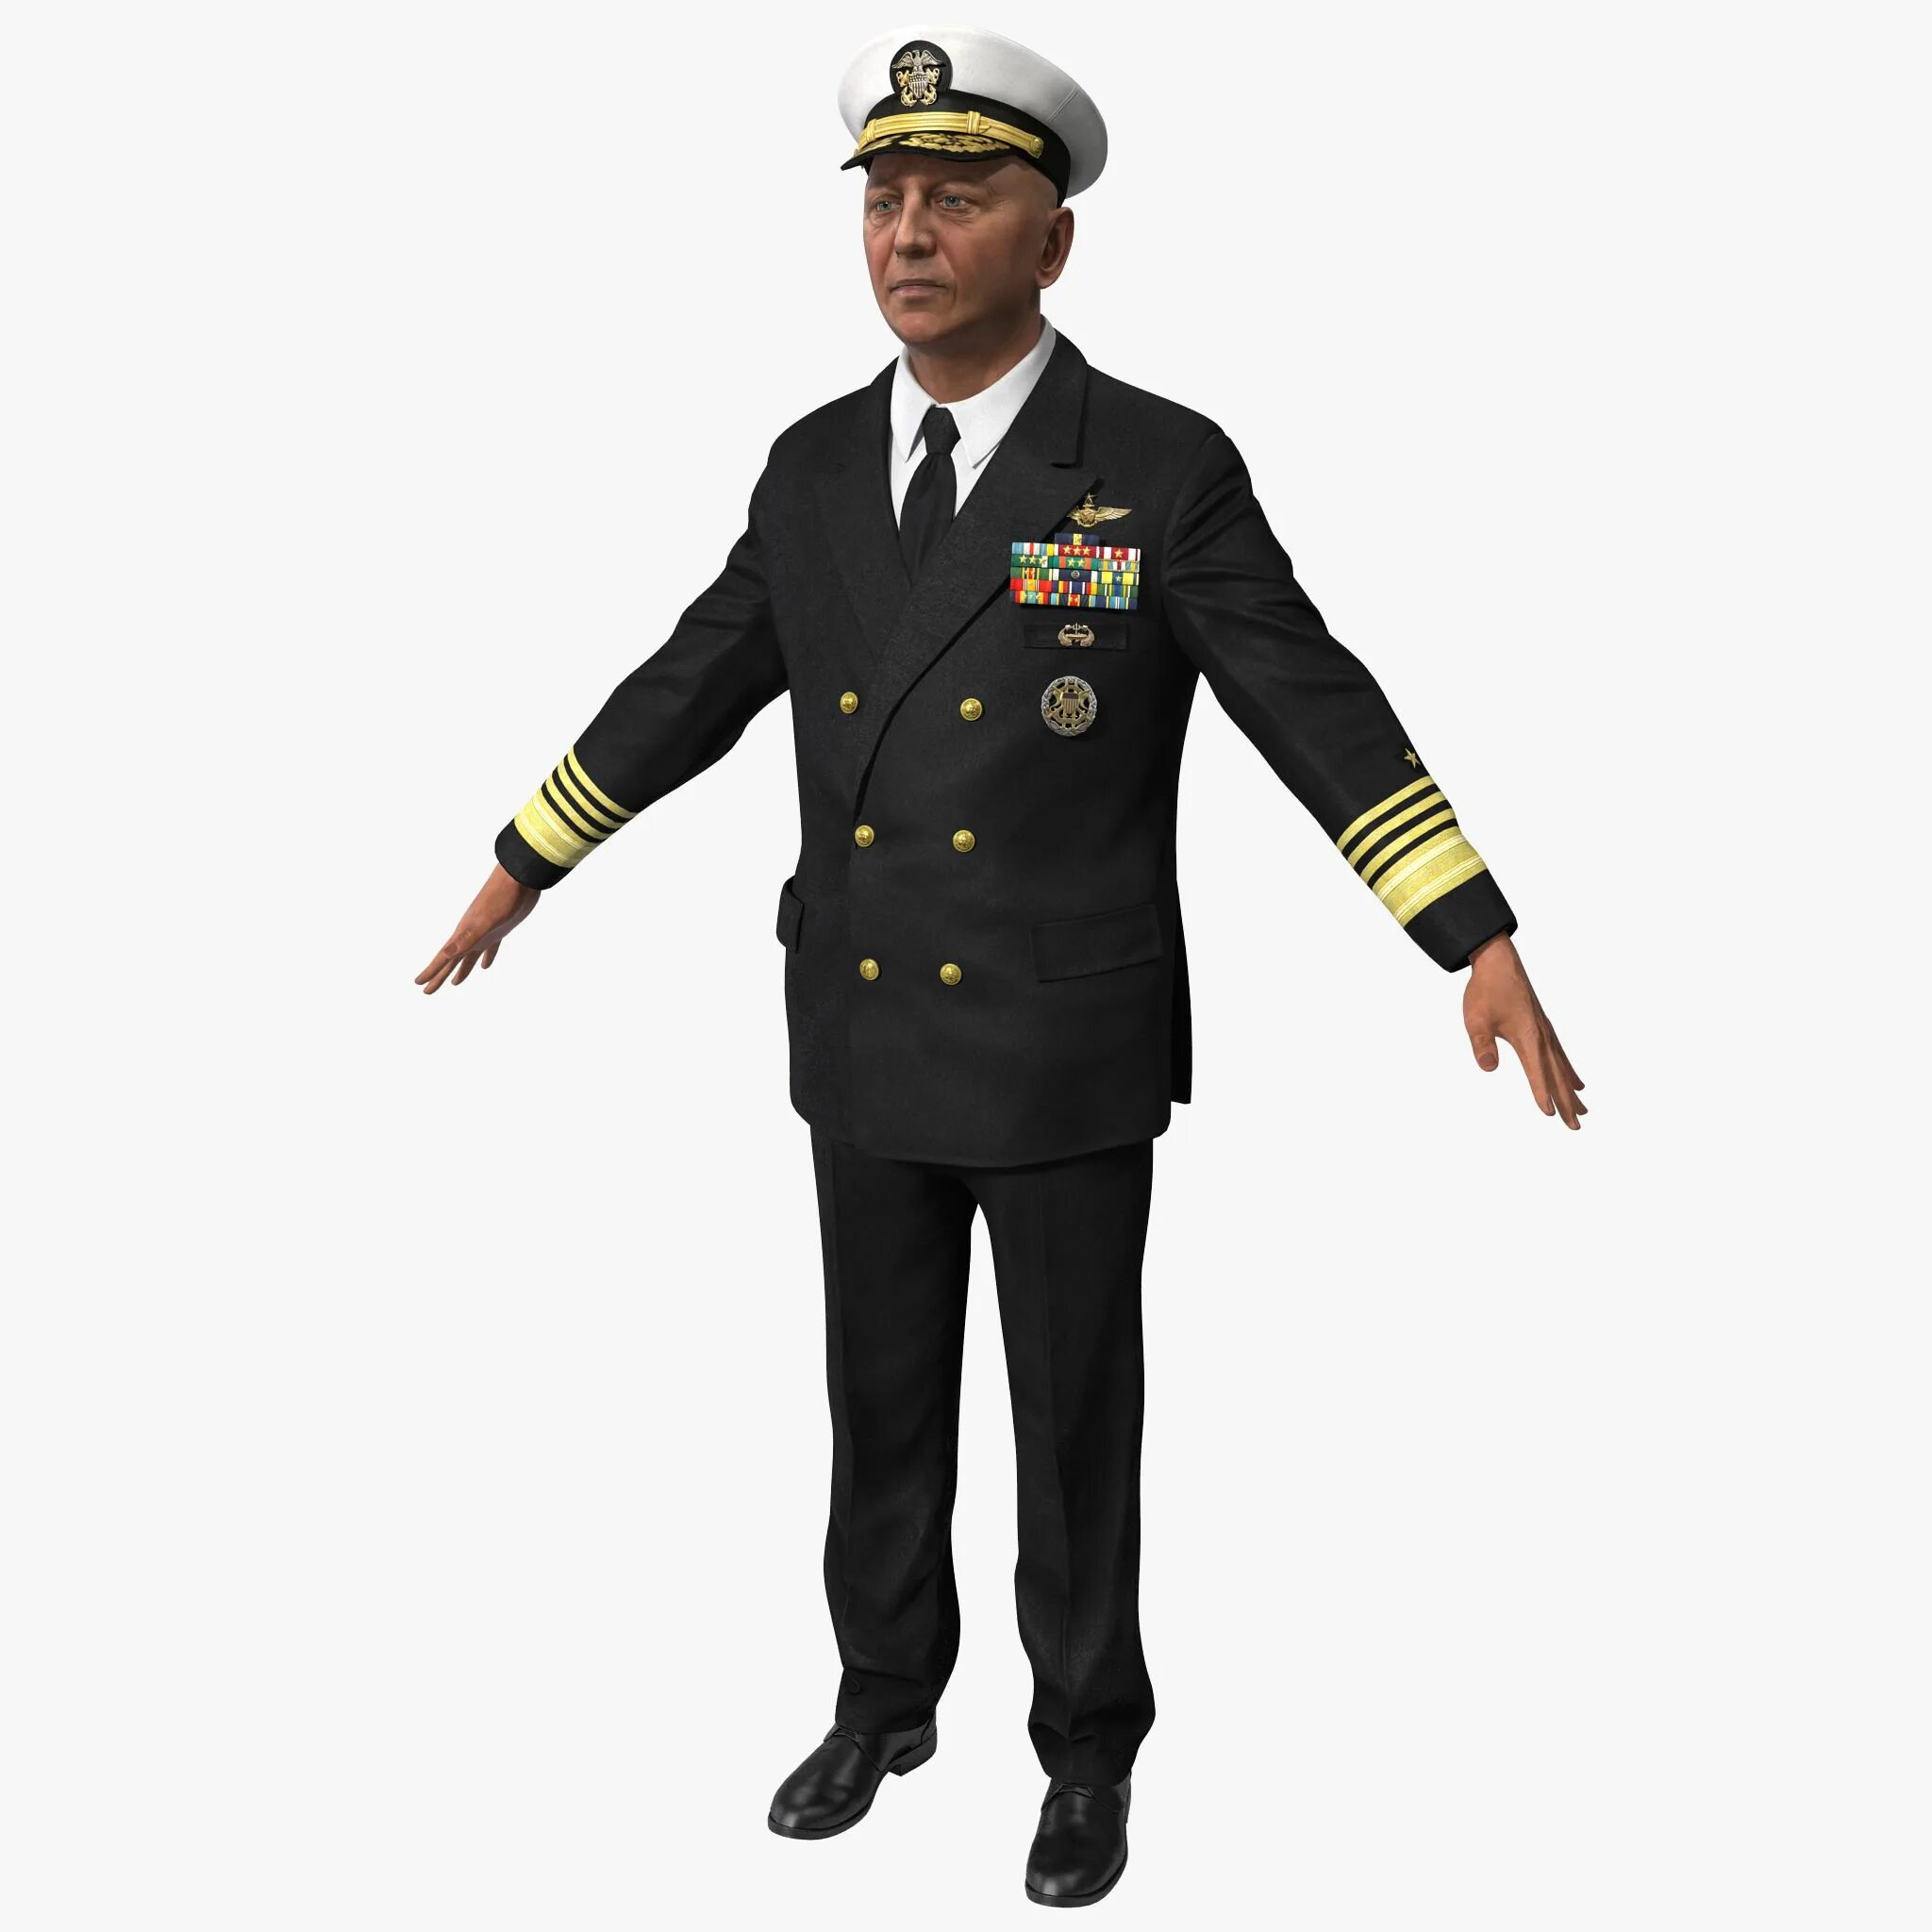 Офицер 3 4. Admiral uniform. Форма Адмирала. Адмиральская форма. Китель Адмирала.